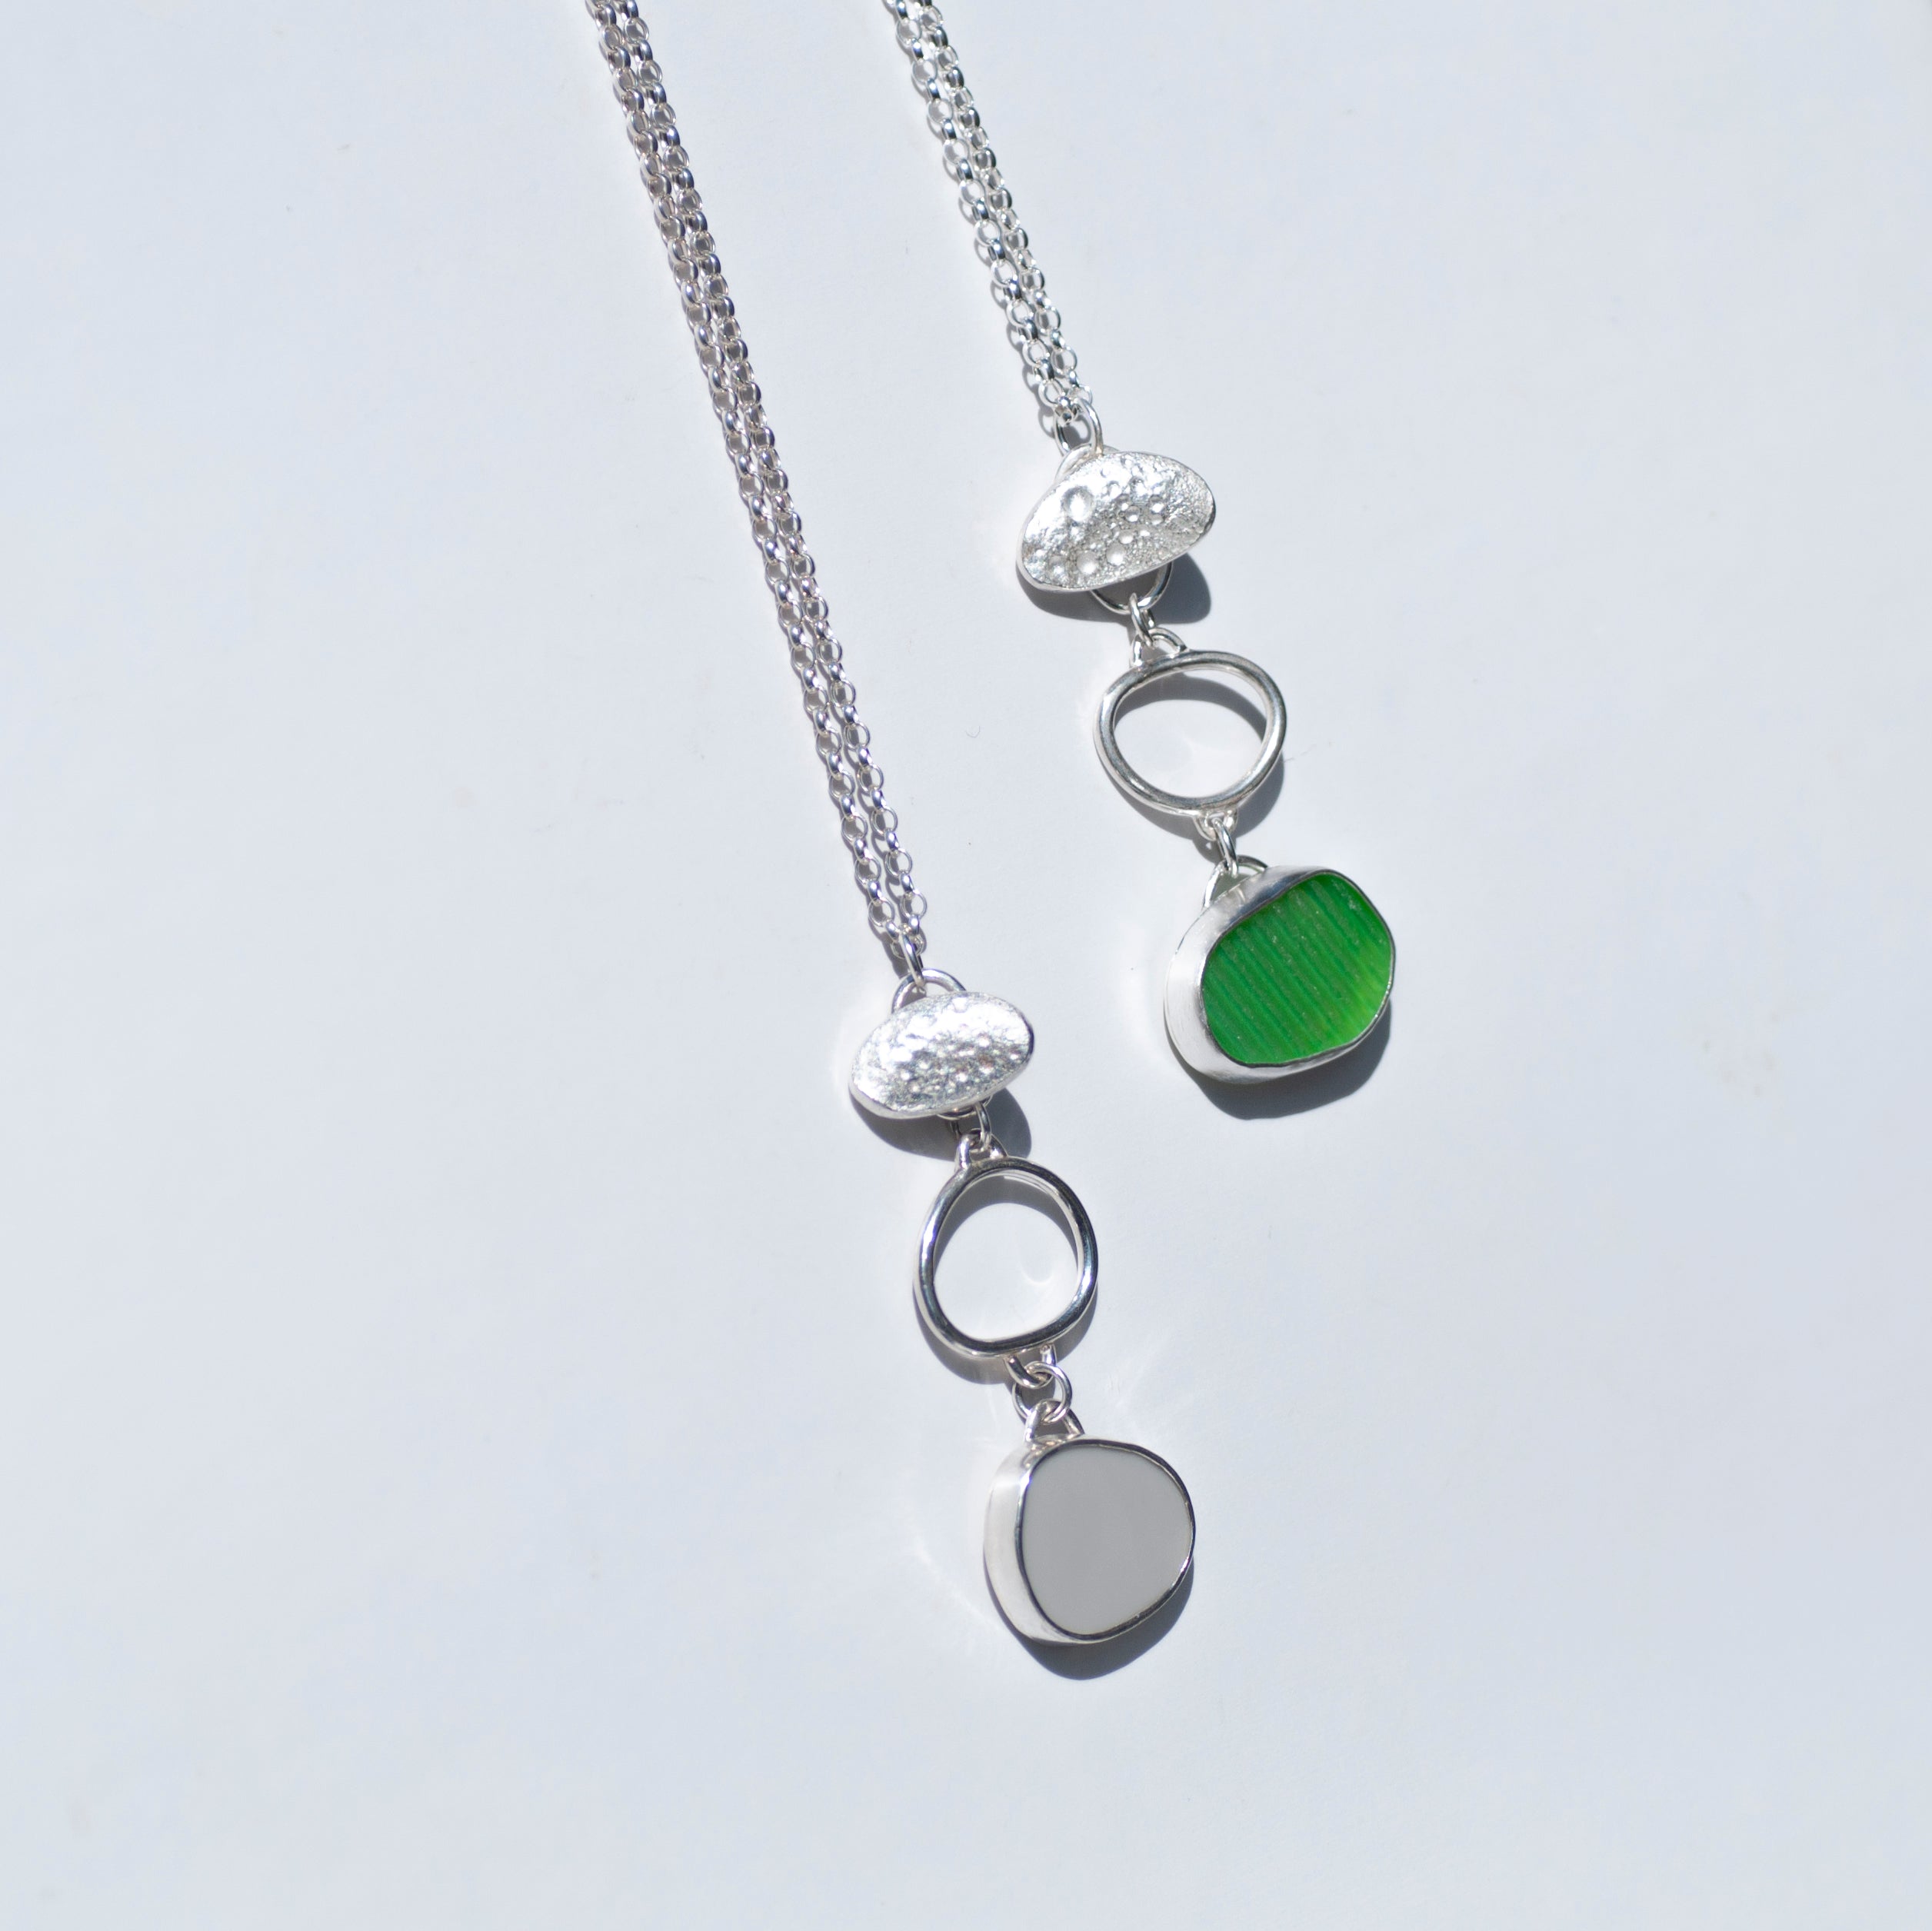 Pebble Collection Trio necklace - Lime Green Milk Sea Glass